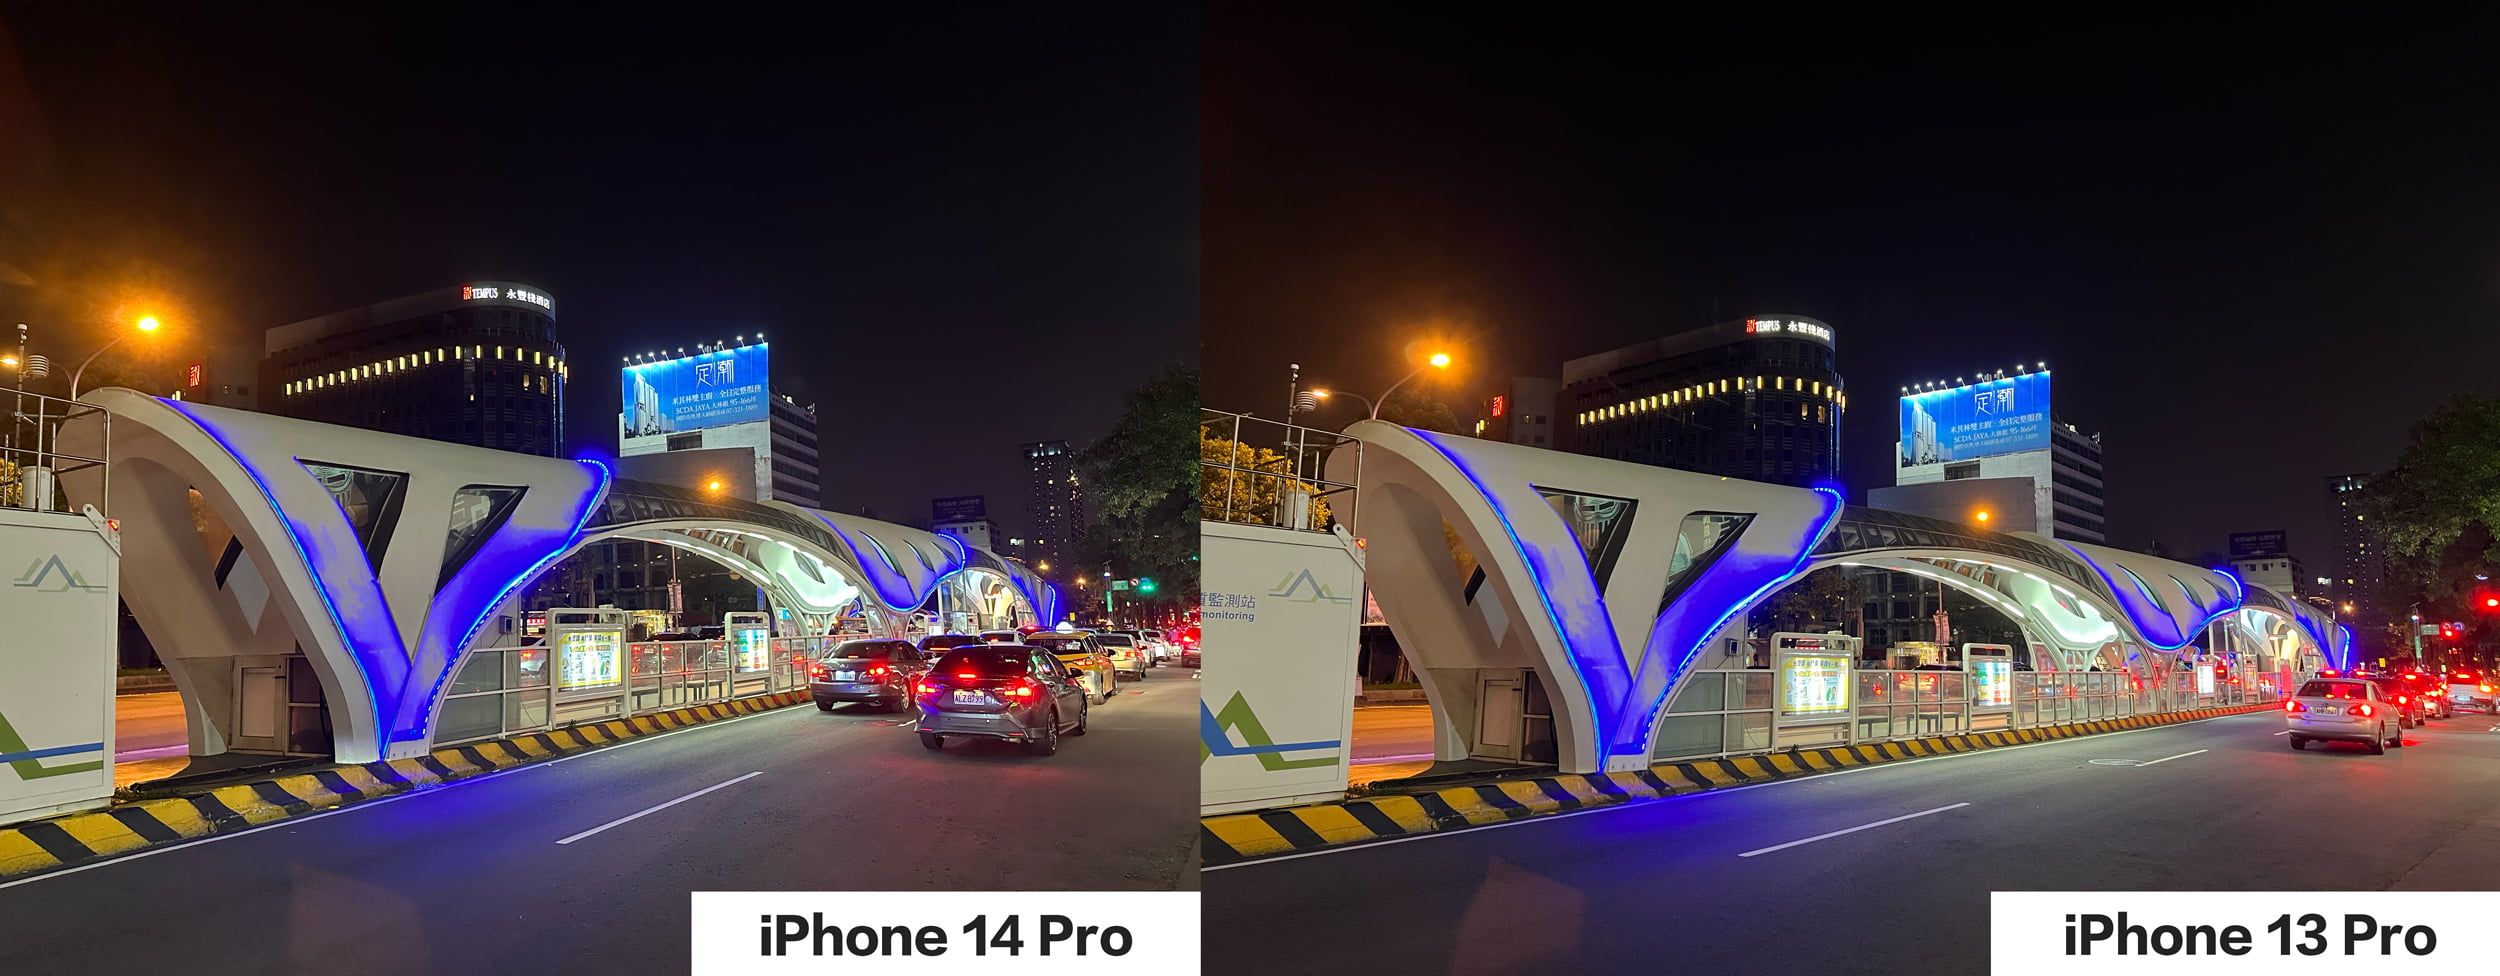 iPhone 14 Pro night shot comparison test 3